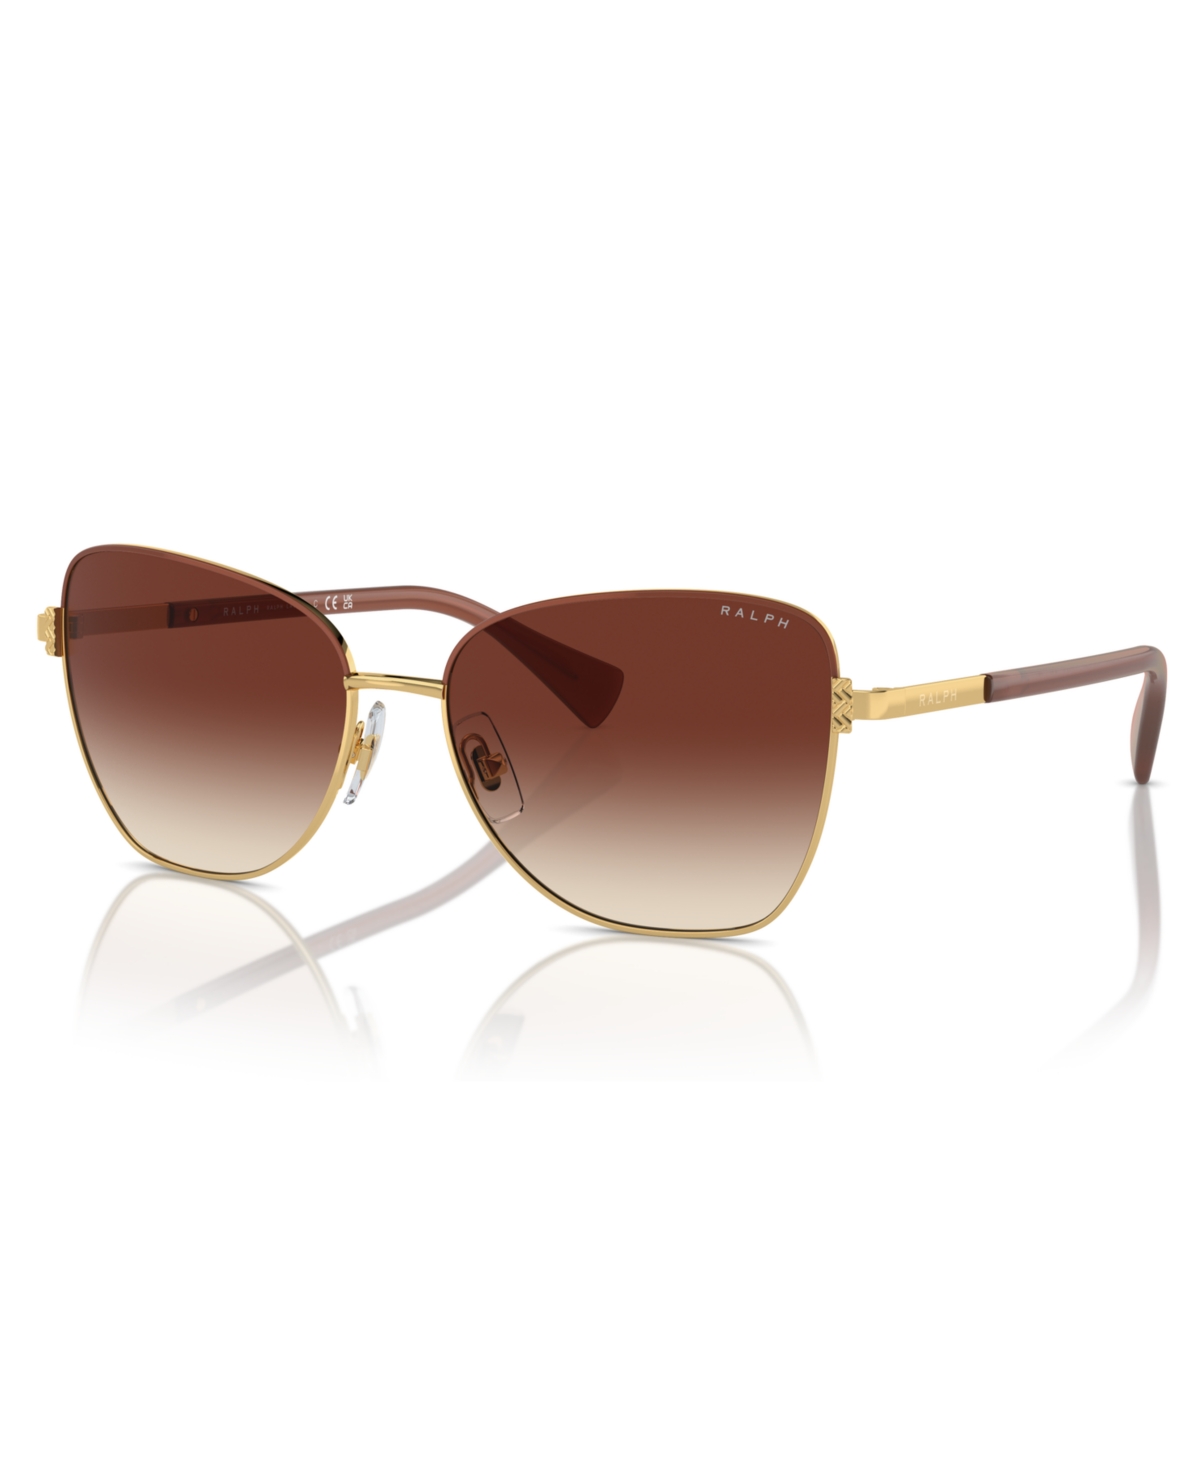 Ralph By Ralph Lauren Women's Sunglasses, Ra4146 In Shiny Gold,brown